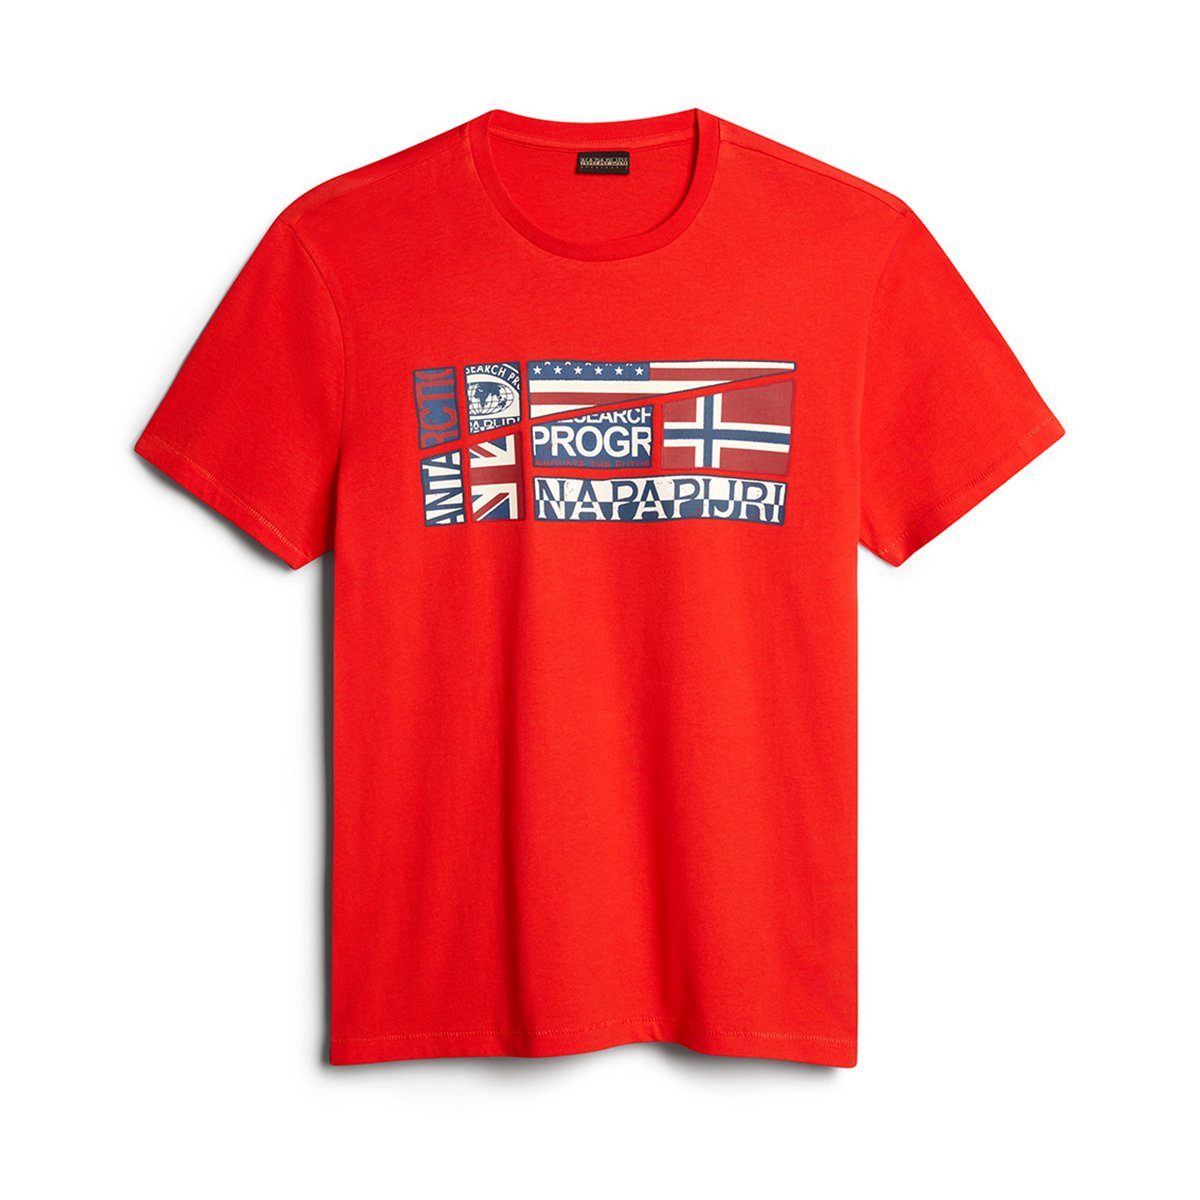 Napapijri T-Shirt NP0A4G34 Herren Rundhals T-Shirt Regular Fit S-Turin Red Cherry(R051)